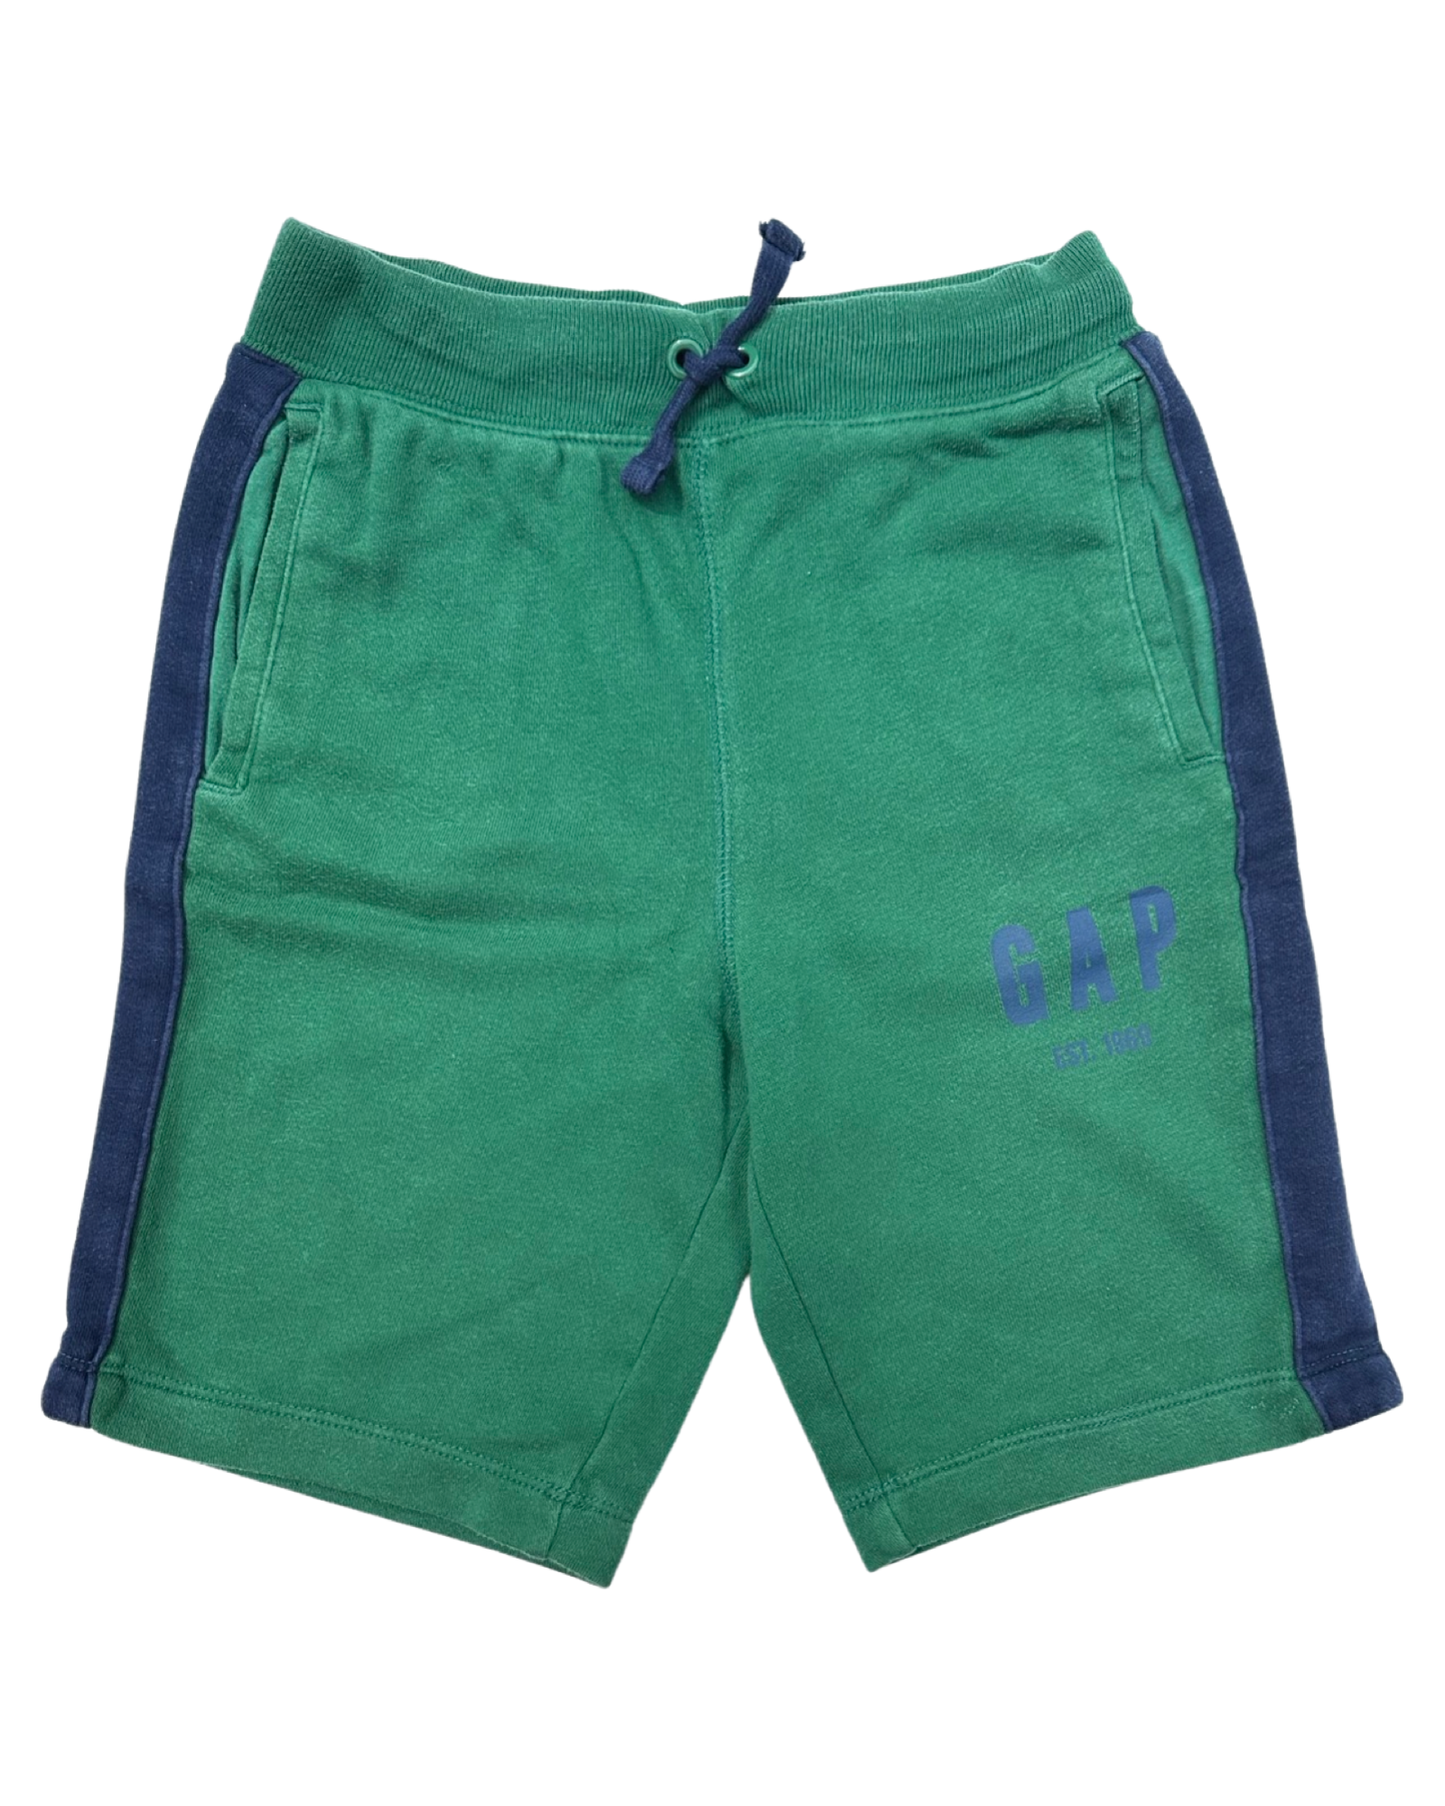 Gap Kids green jersey shorts (size 8-9yrs)